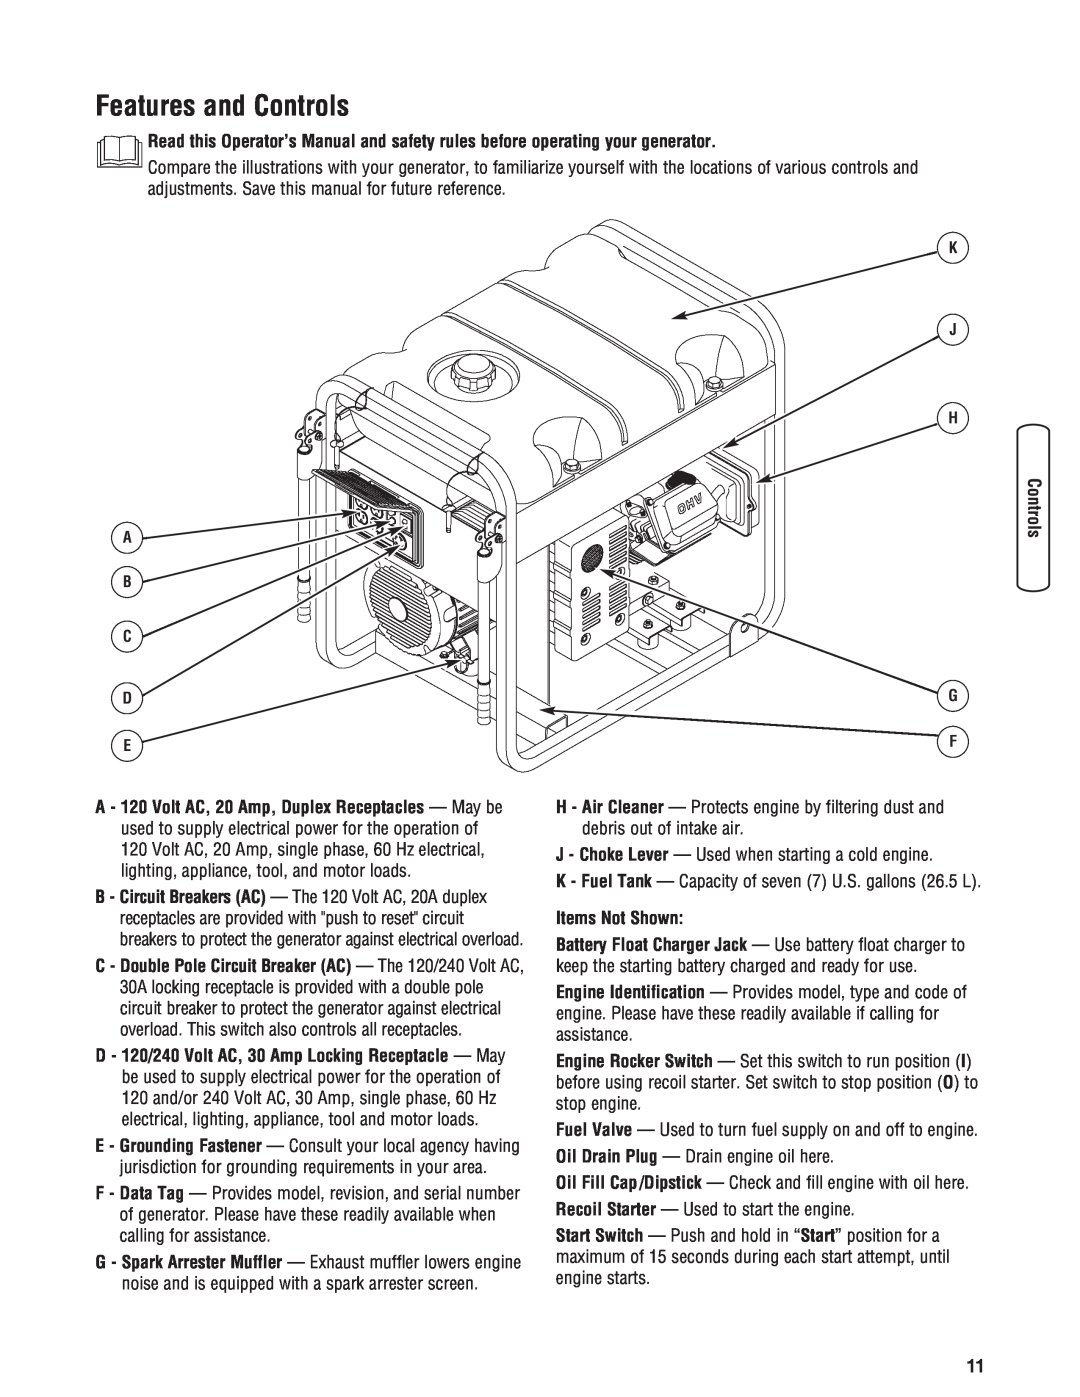 Briggs & Stratton 8000 Watt Portable Generator Features and Controls, A - 120 Volt AC, 20 Amp, Duplex Receptacles - May be 